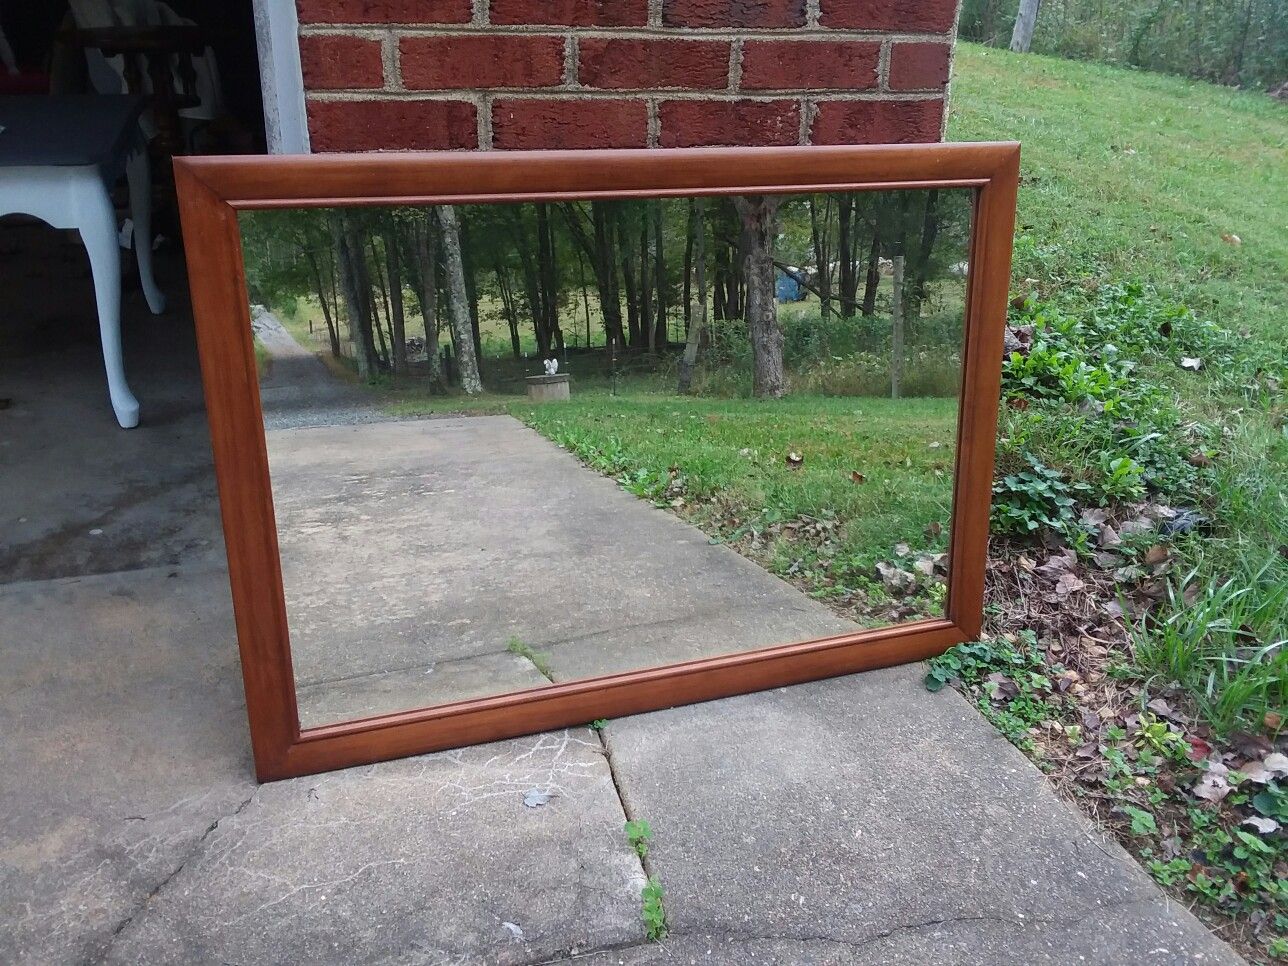 Solid wood mirror